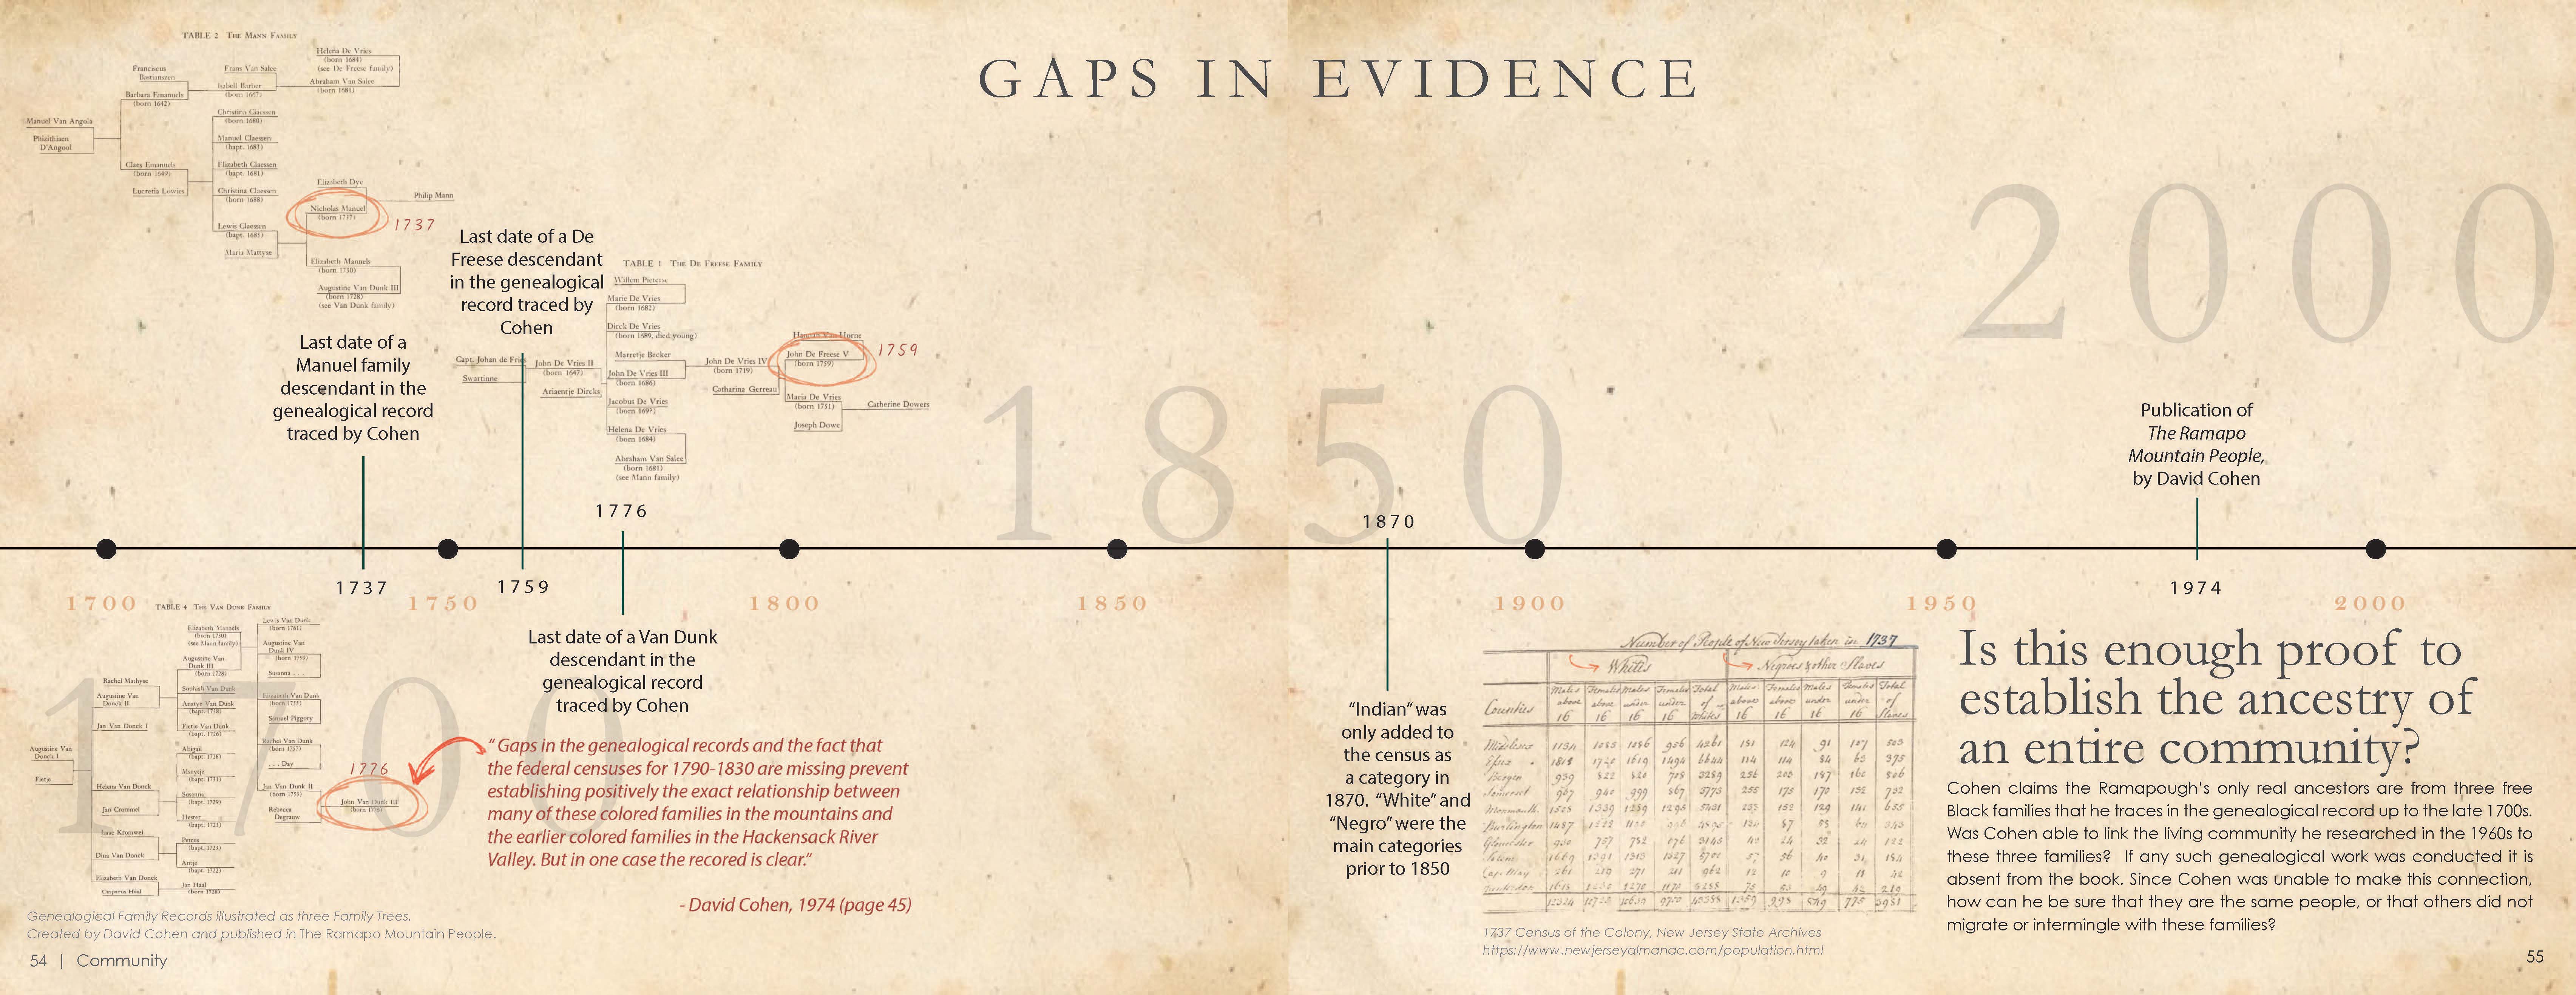 Gaps in evidence timeline